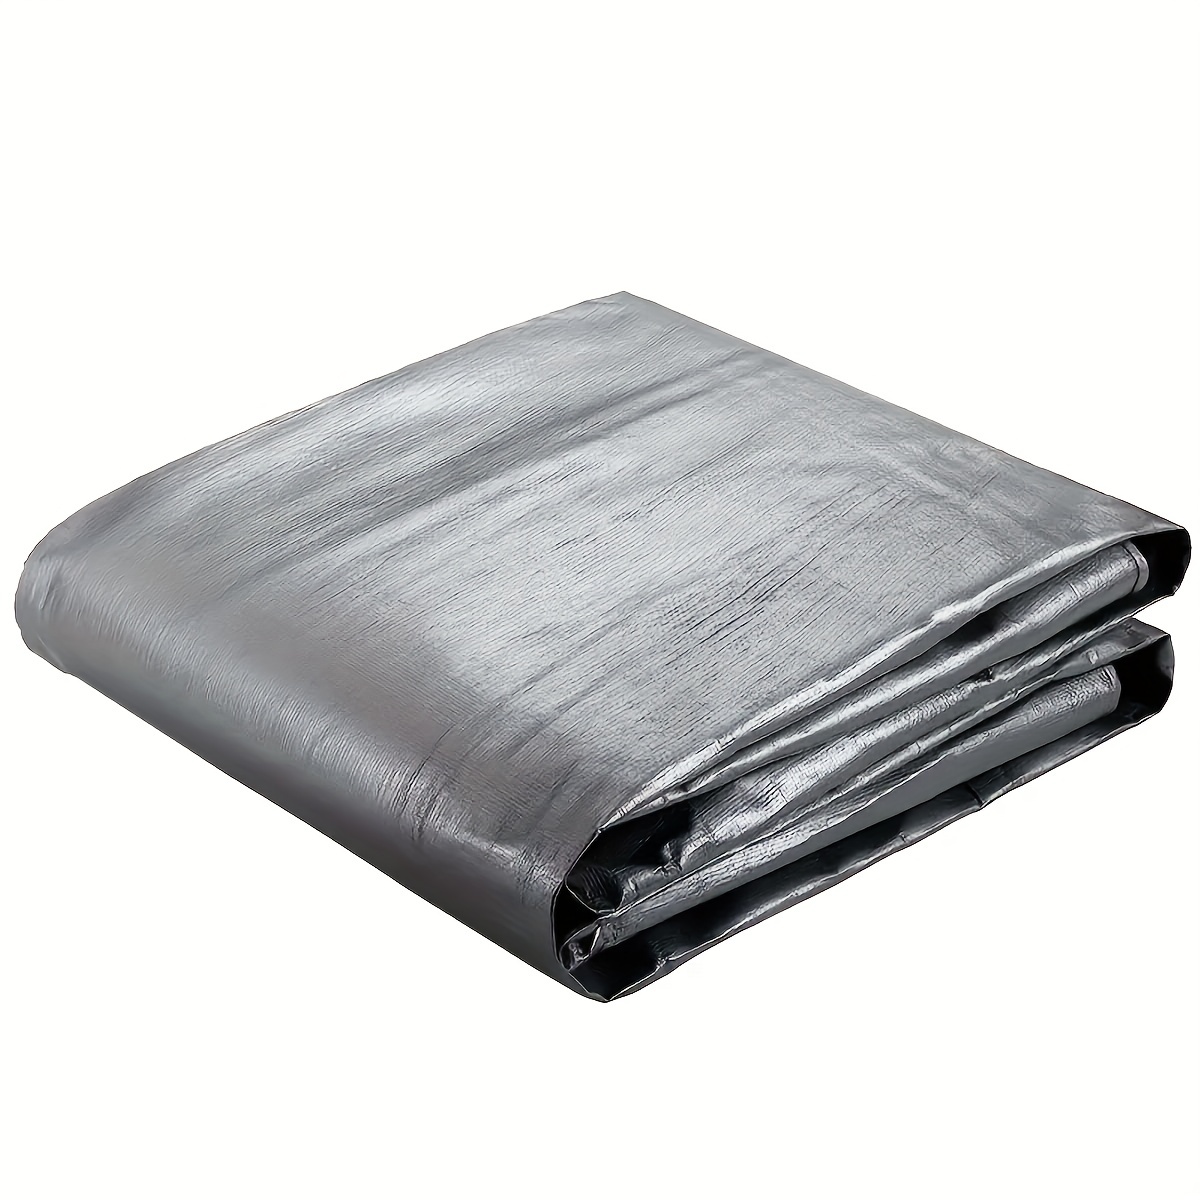 Black PE Tarpaulin with Foam / Architectural Concrete Blanket - China PE  Blanket and PE Tarpaulin price